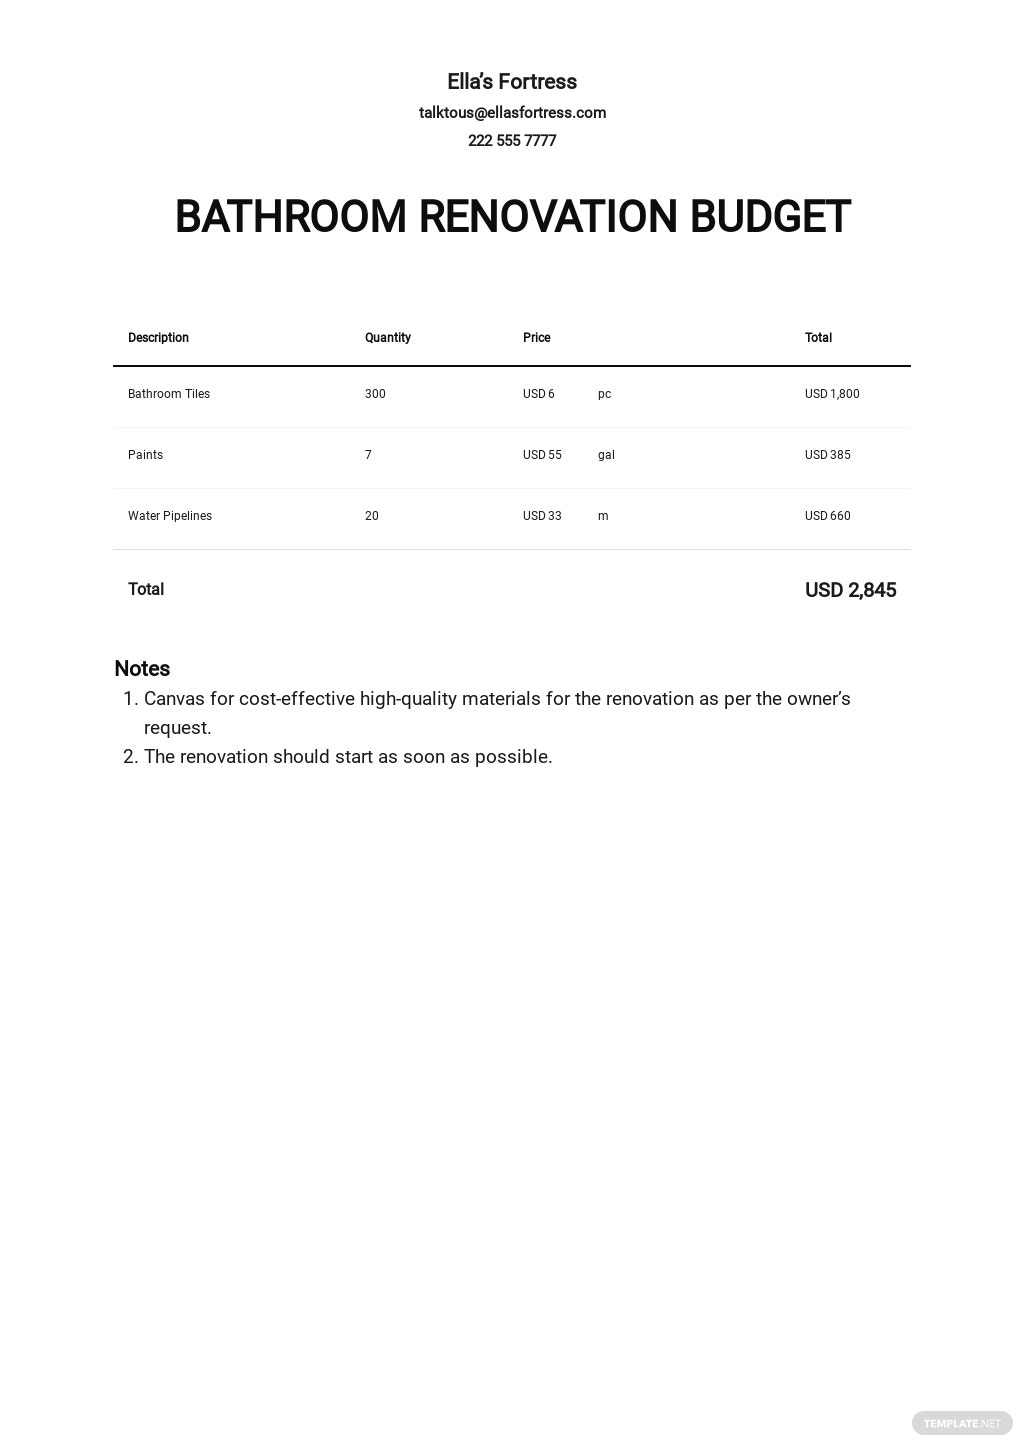 Bathroom Renovation Budget Template [Free PDF] - Word  Excel  For Bathroom Renovation Budget Template In Bathroom Renovation Budget Template